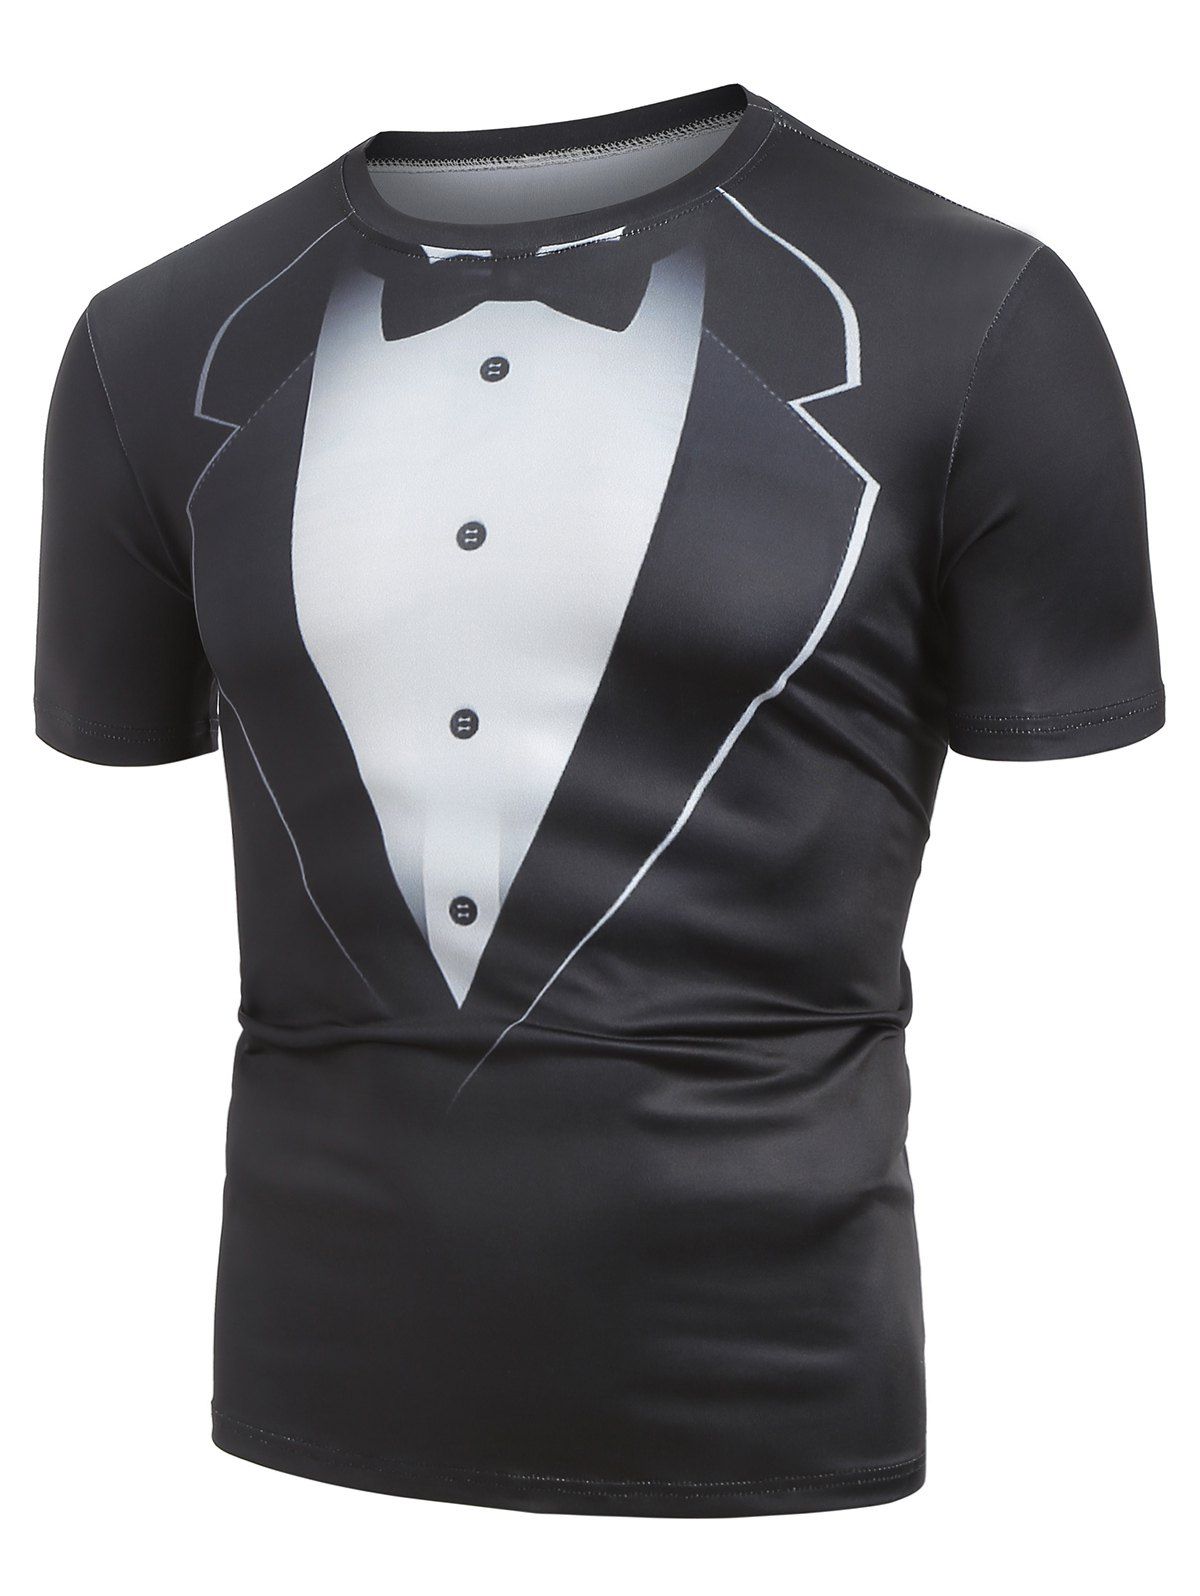 Bow Tie Print Short Sleeve T Shirt - BLACK 3XL